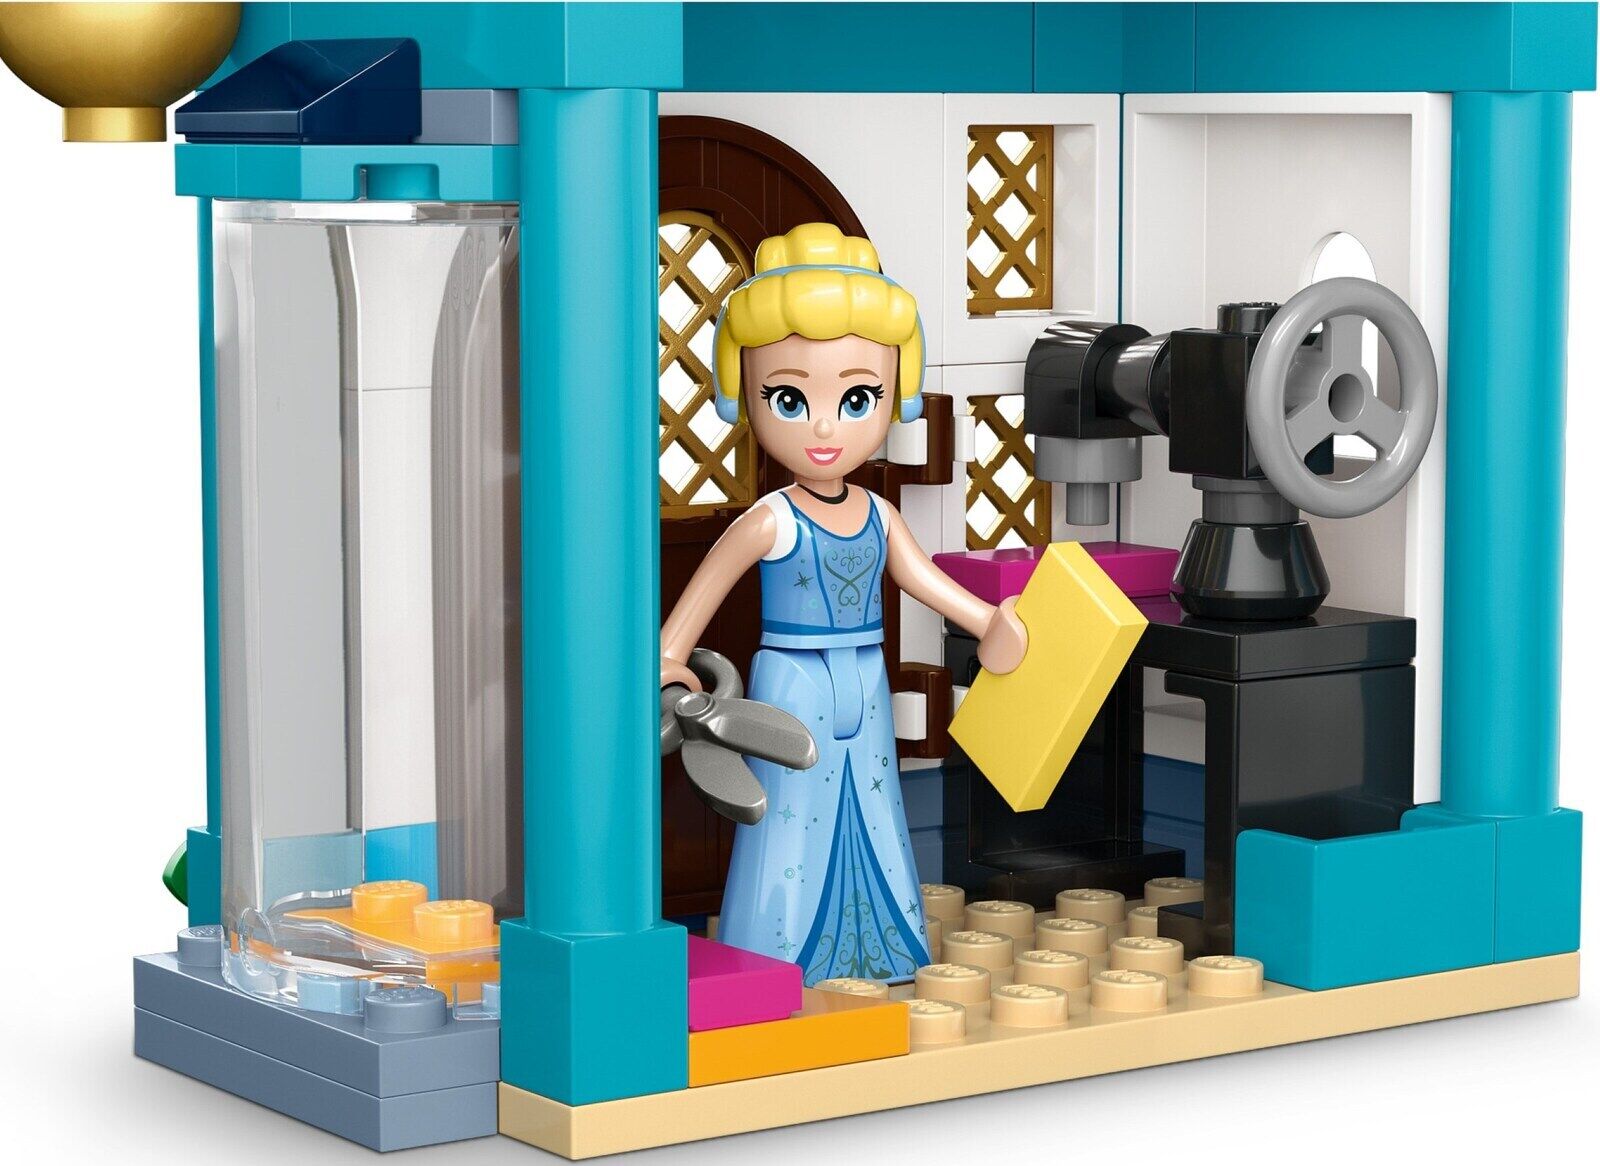 LEGO Disney Disney Princess Market Adventure 43246